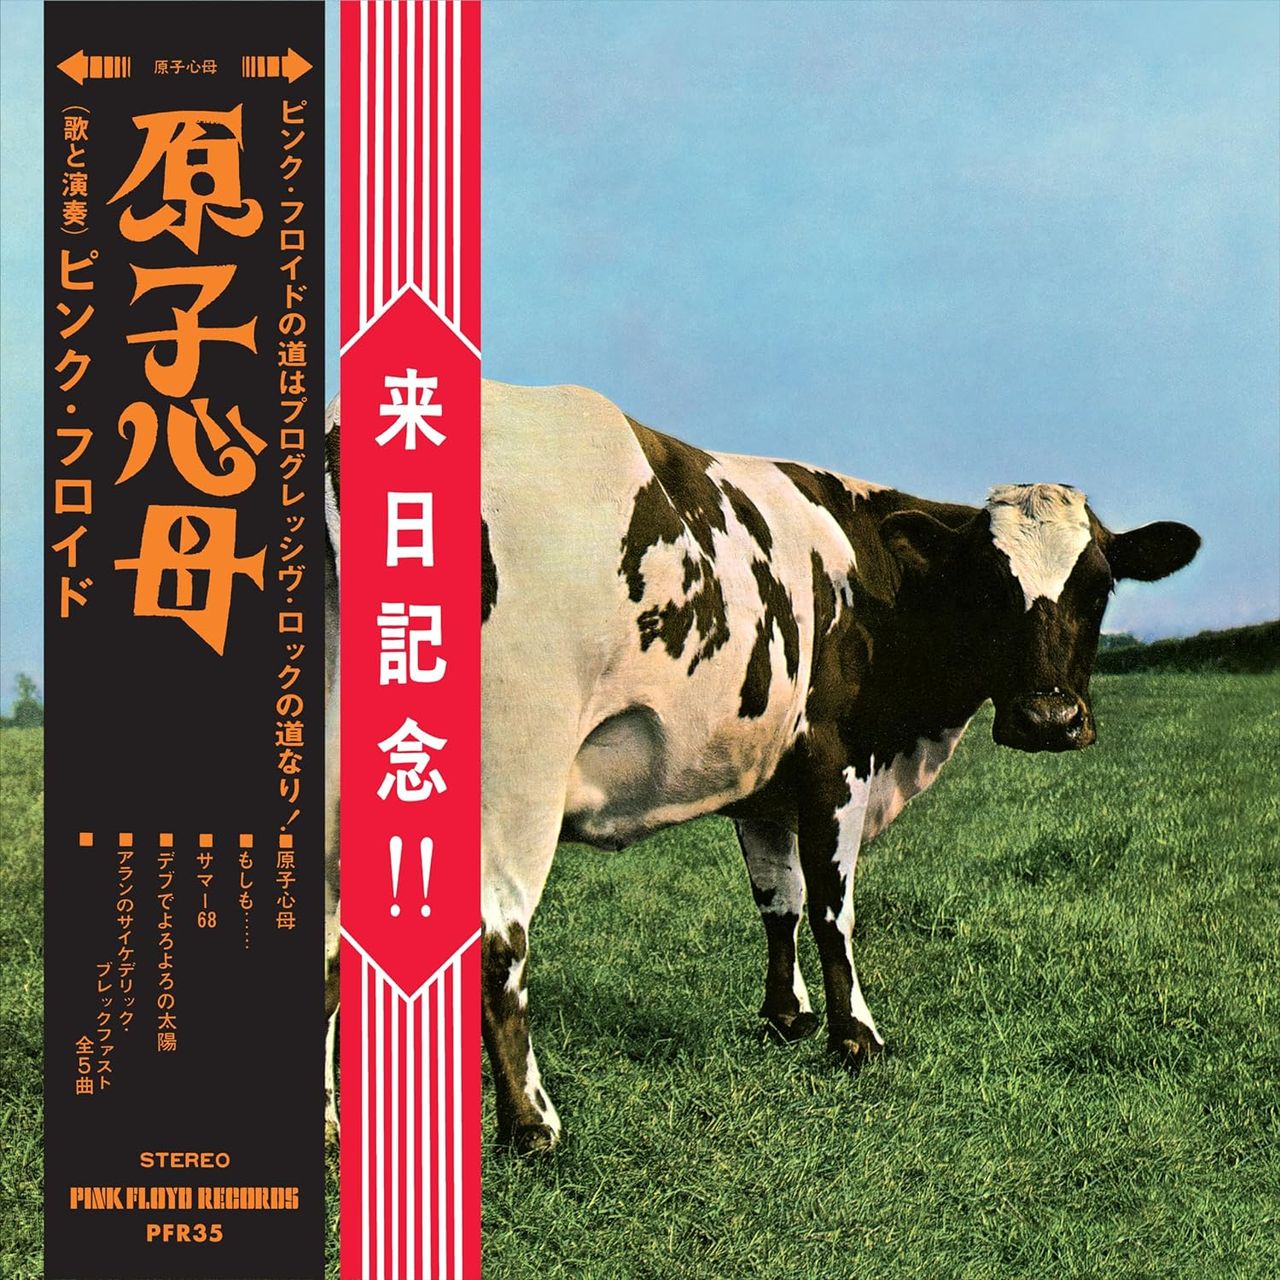 Pink Floyd Atom Heart Mother 'Hakone Aphrodite Japan 1971' Edition -  CD+Blu-Ray UK 2-disc CD/DVD set